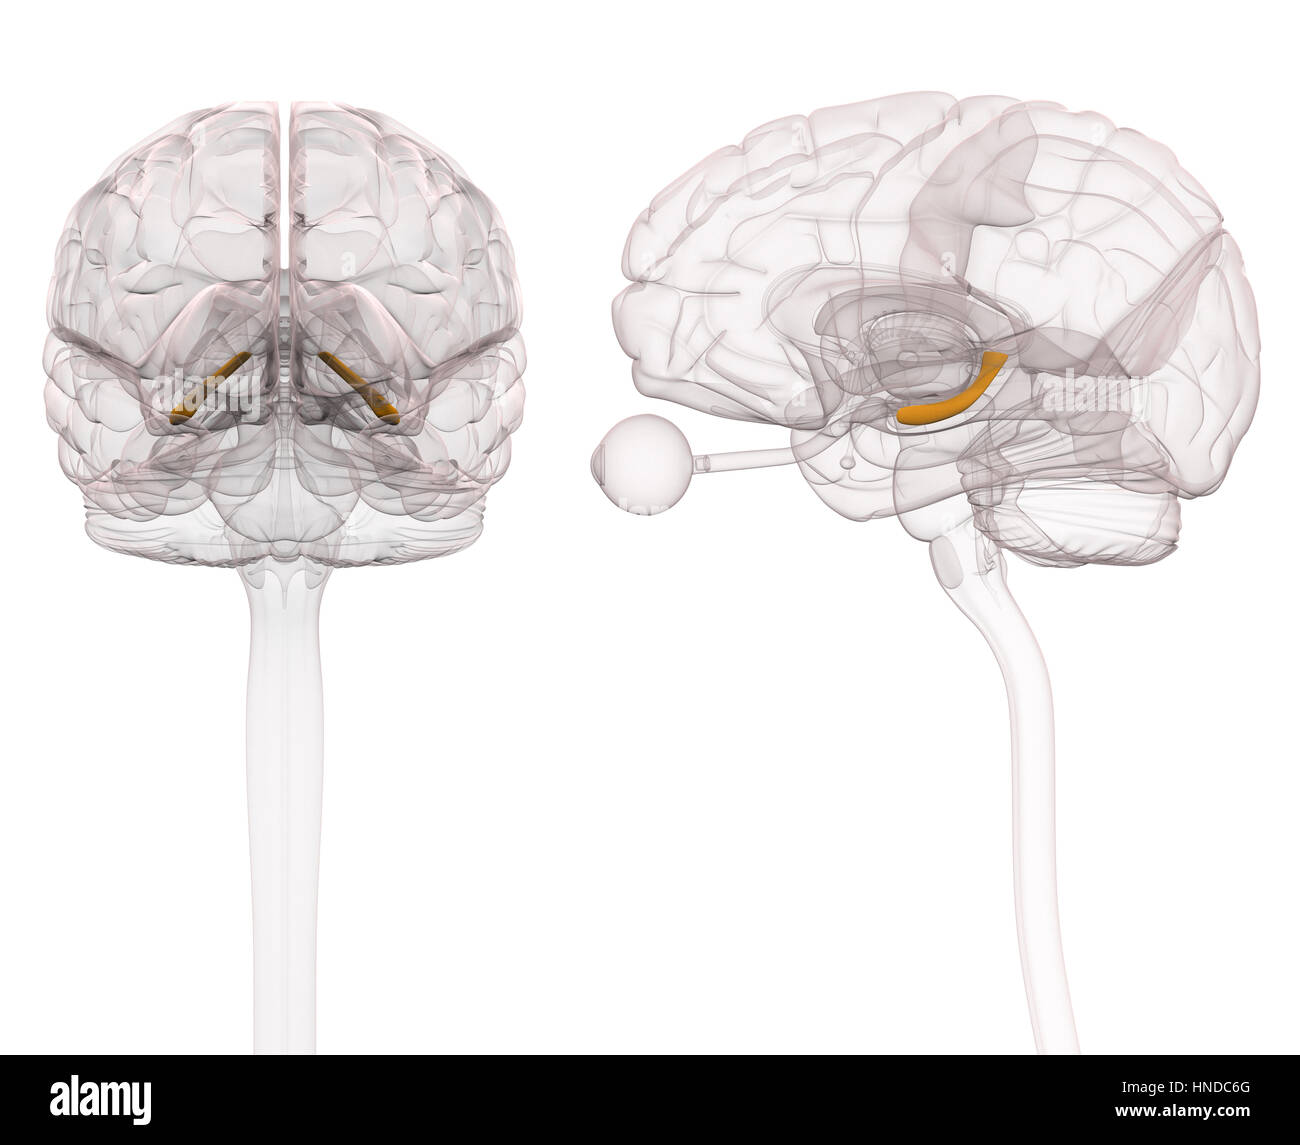 Hippocampus Brain Anatomy - 3d illustration Stock Photo